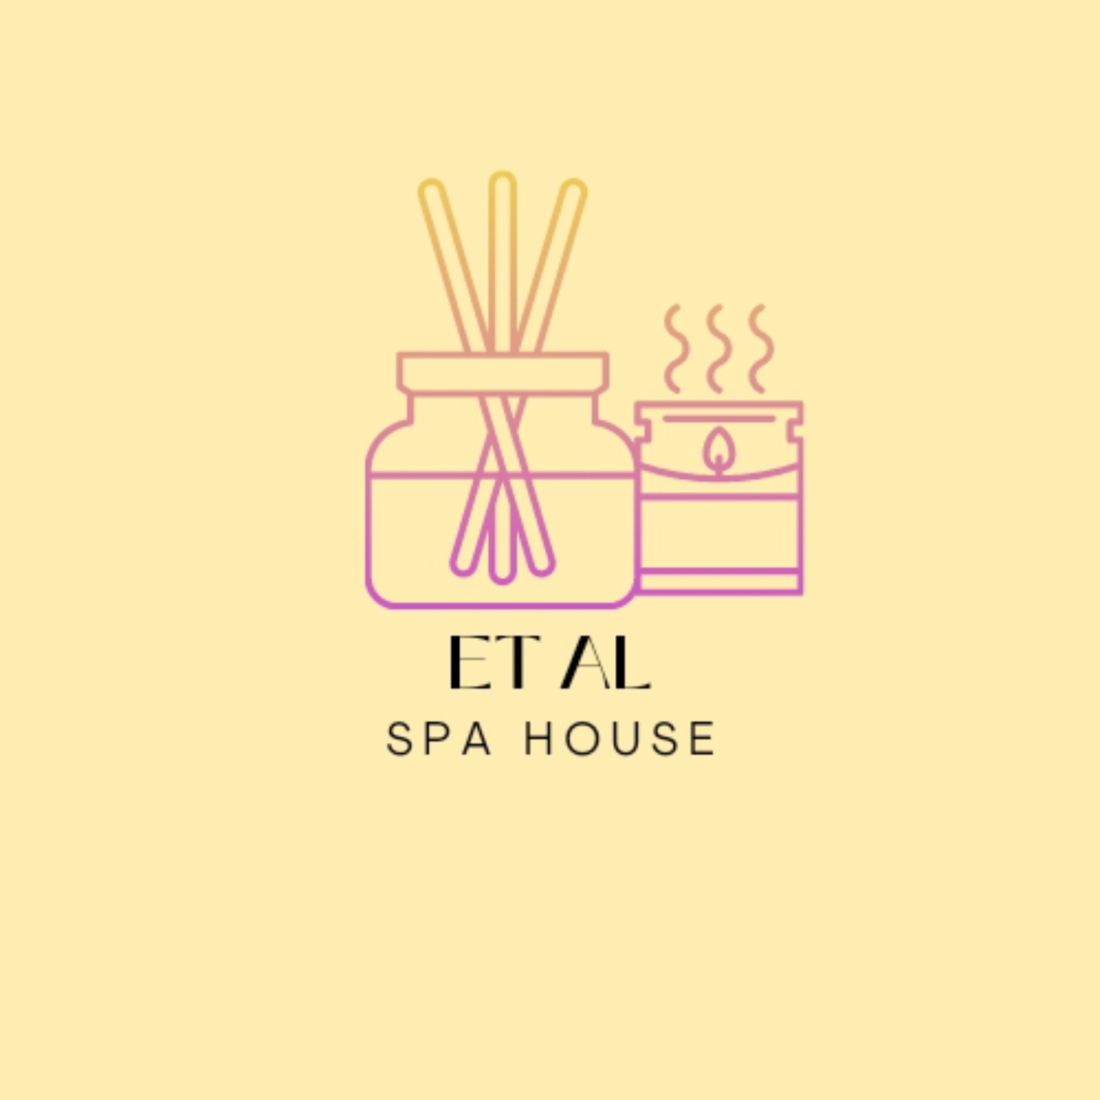 Et Al Spa house logo design cover image.